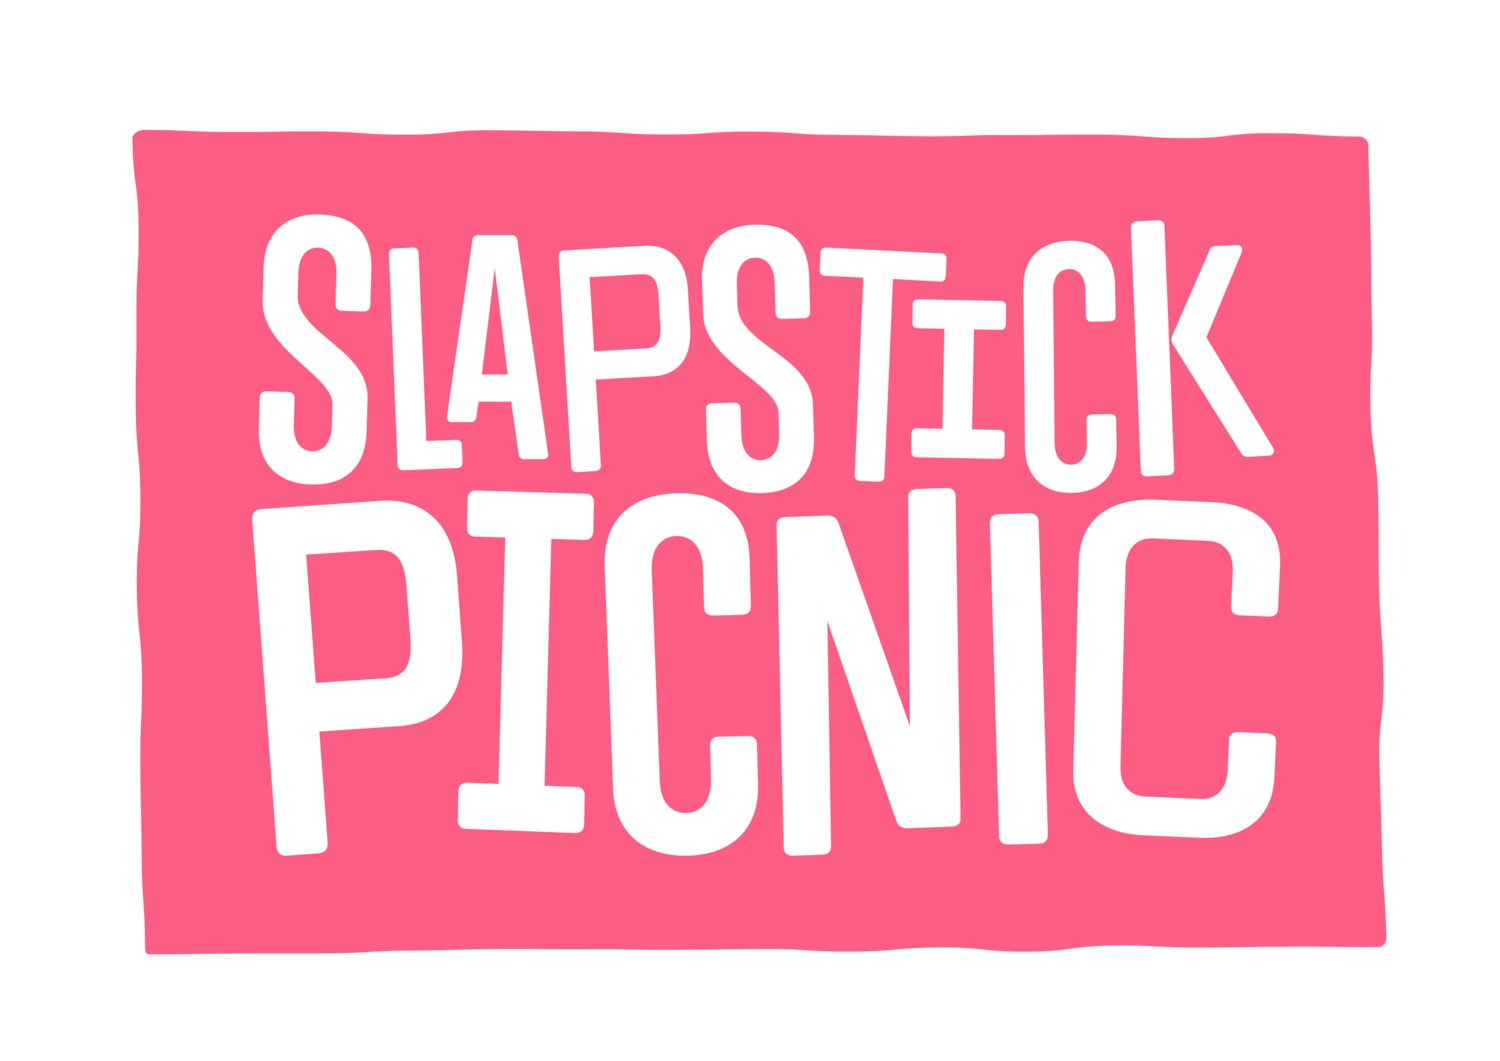 Slapstick Picnic